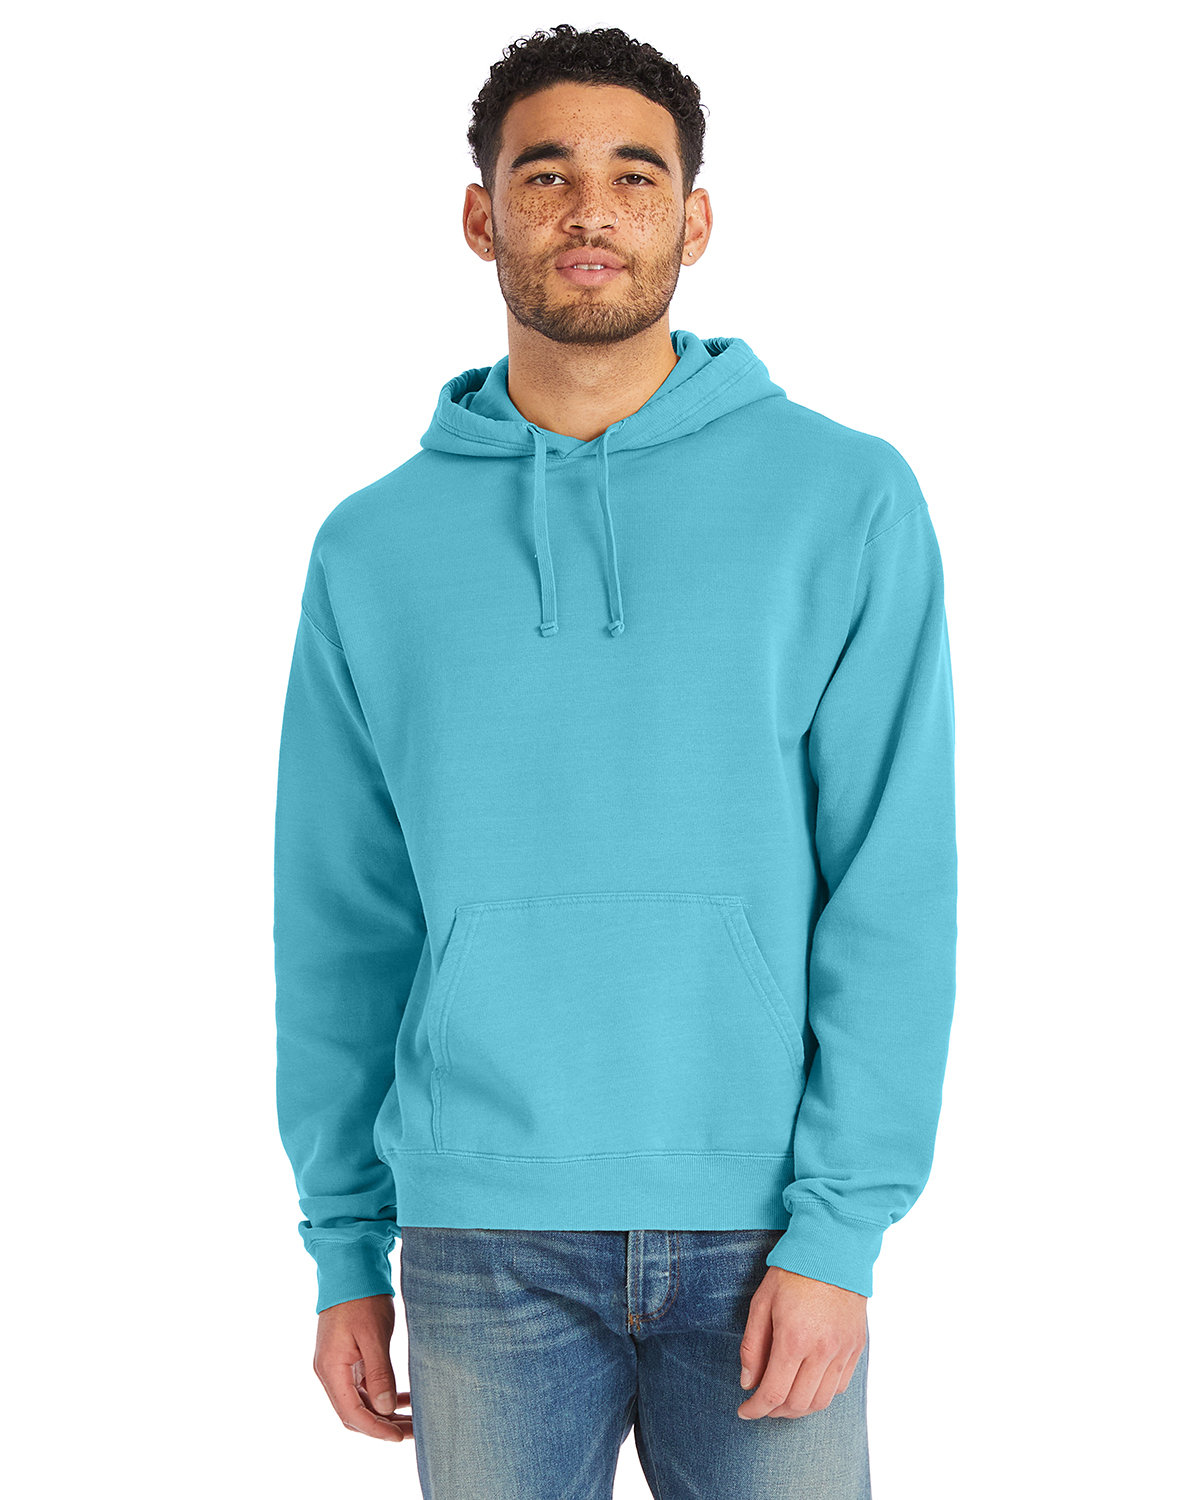 ComfortWash by Hanes Unisex Pullover Hooded Sweatshirt FRESHWATER 